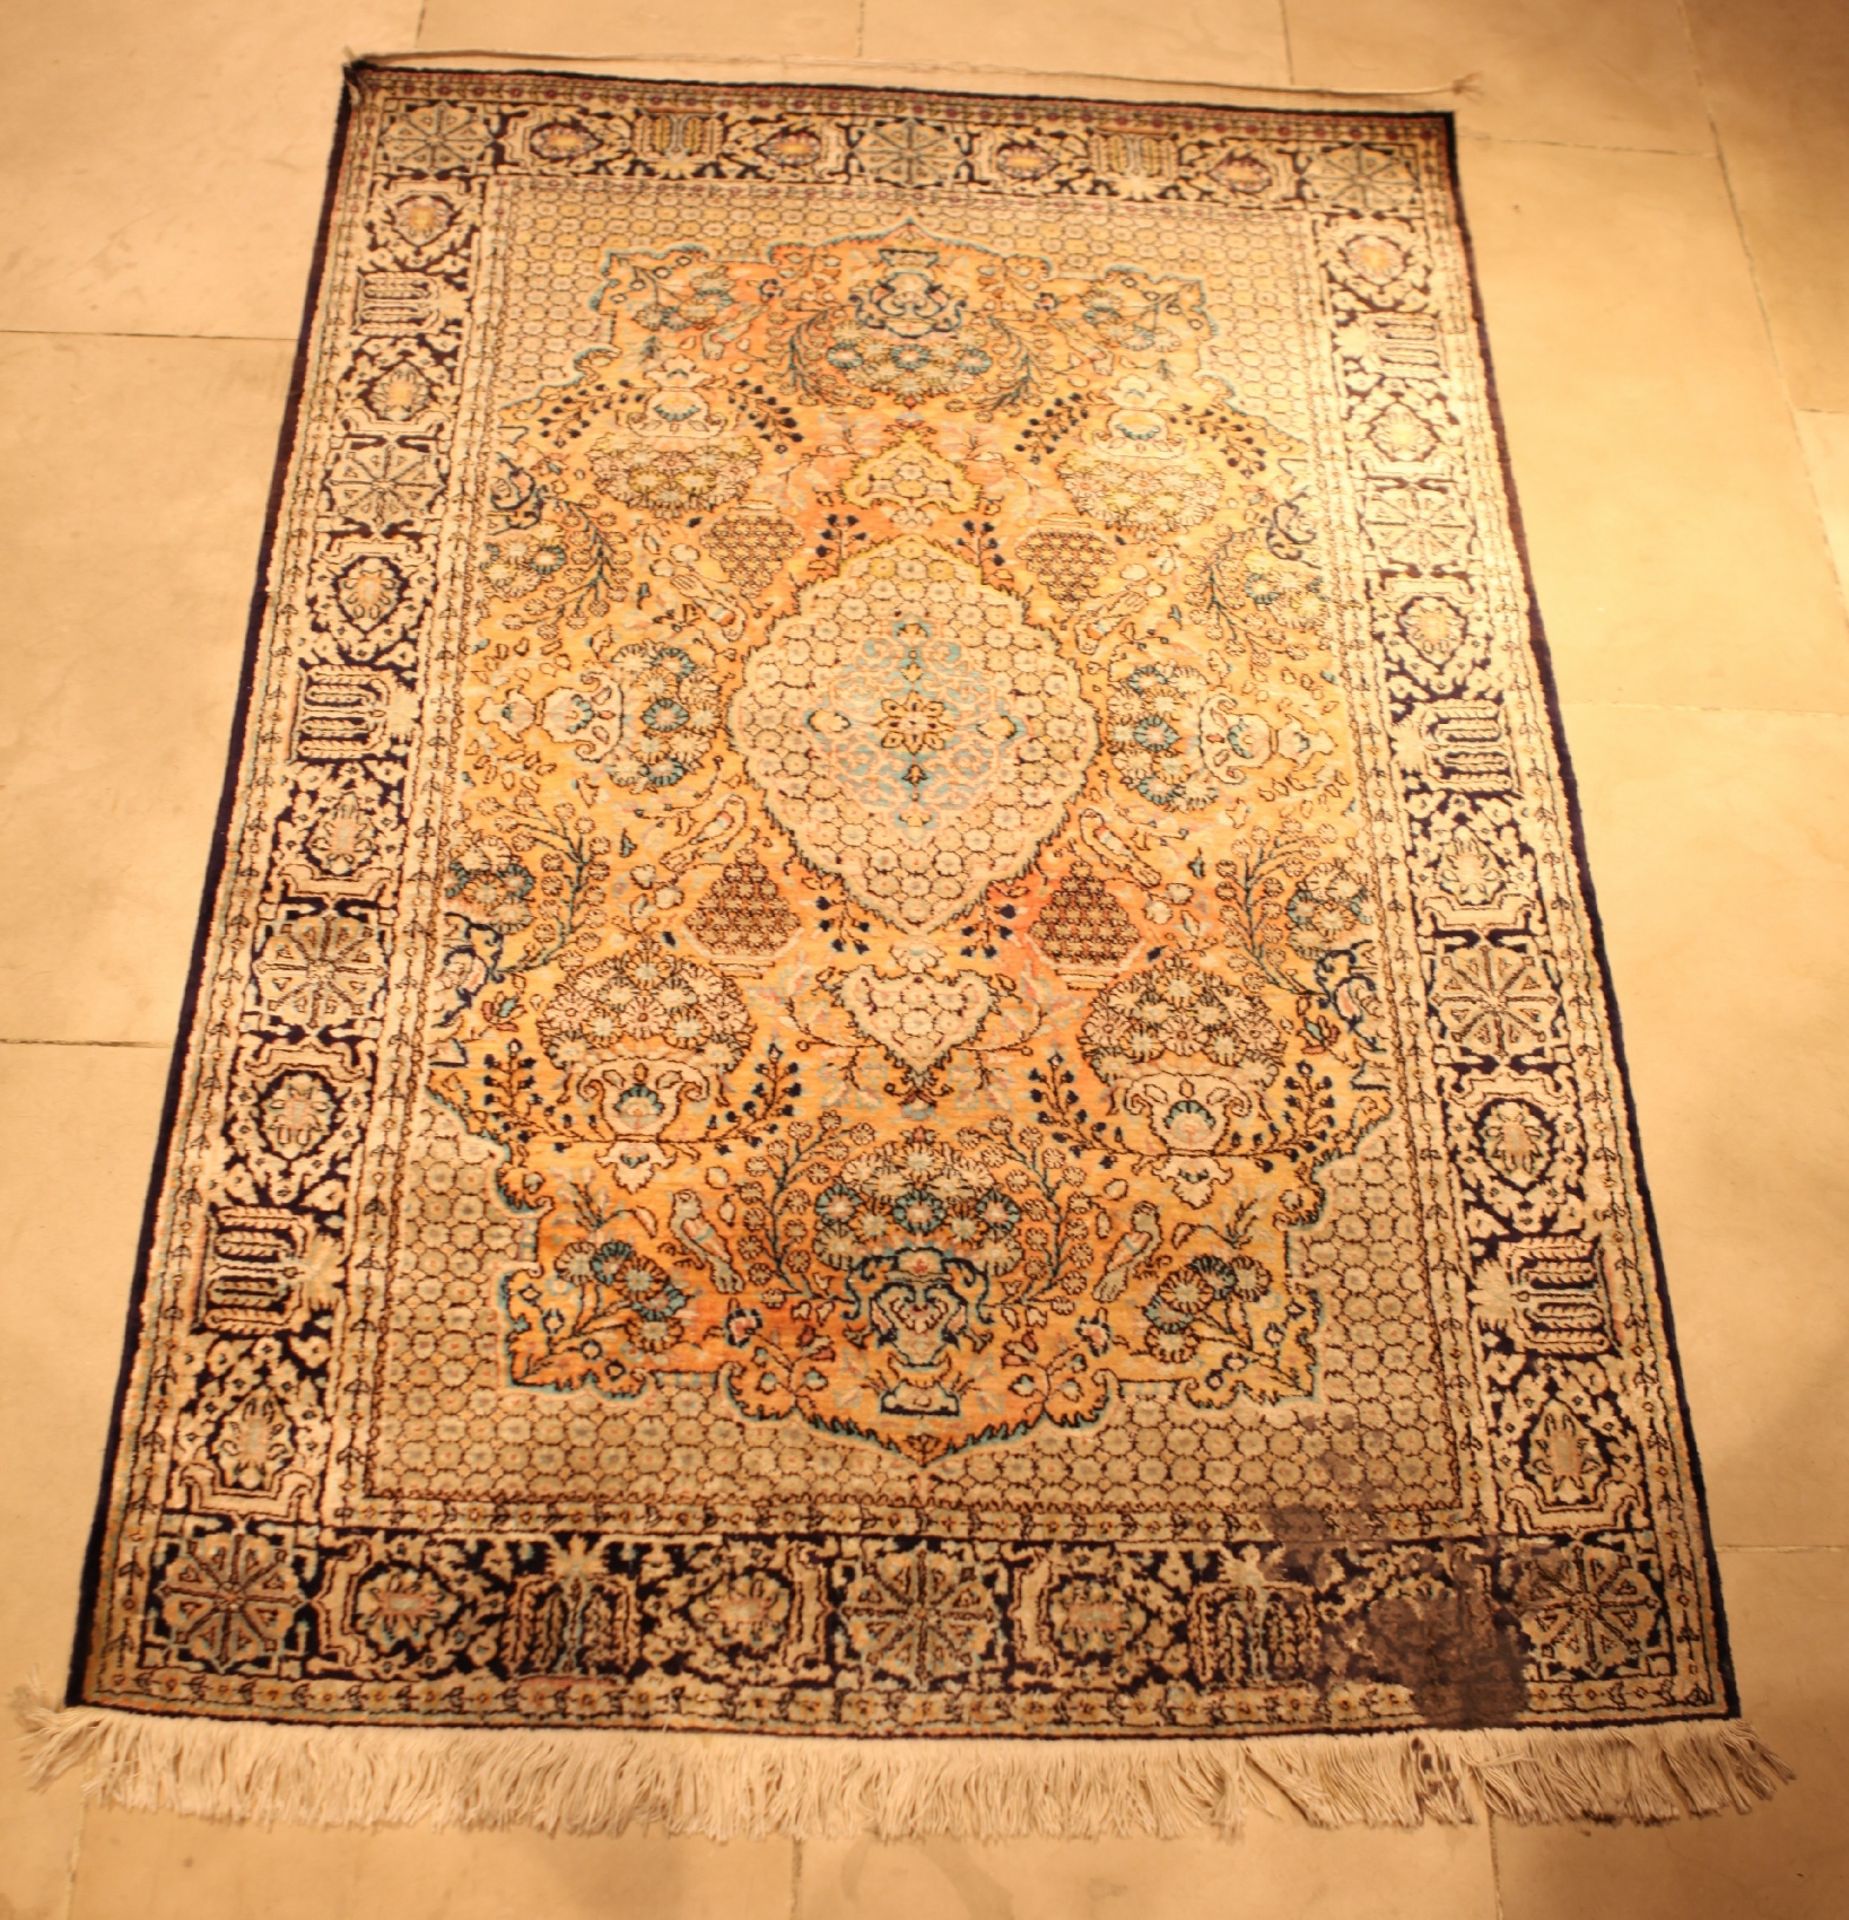 Ghom Seidenteppich Iran | Ghom silk carpet Iran